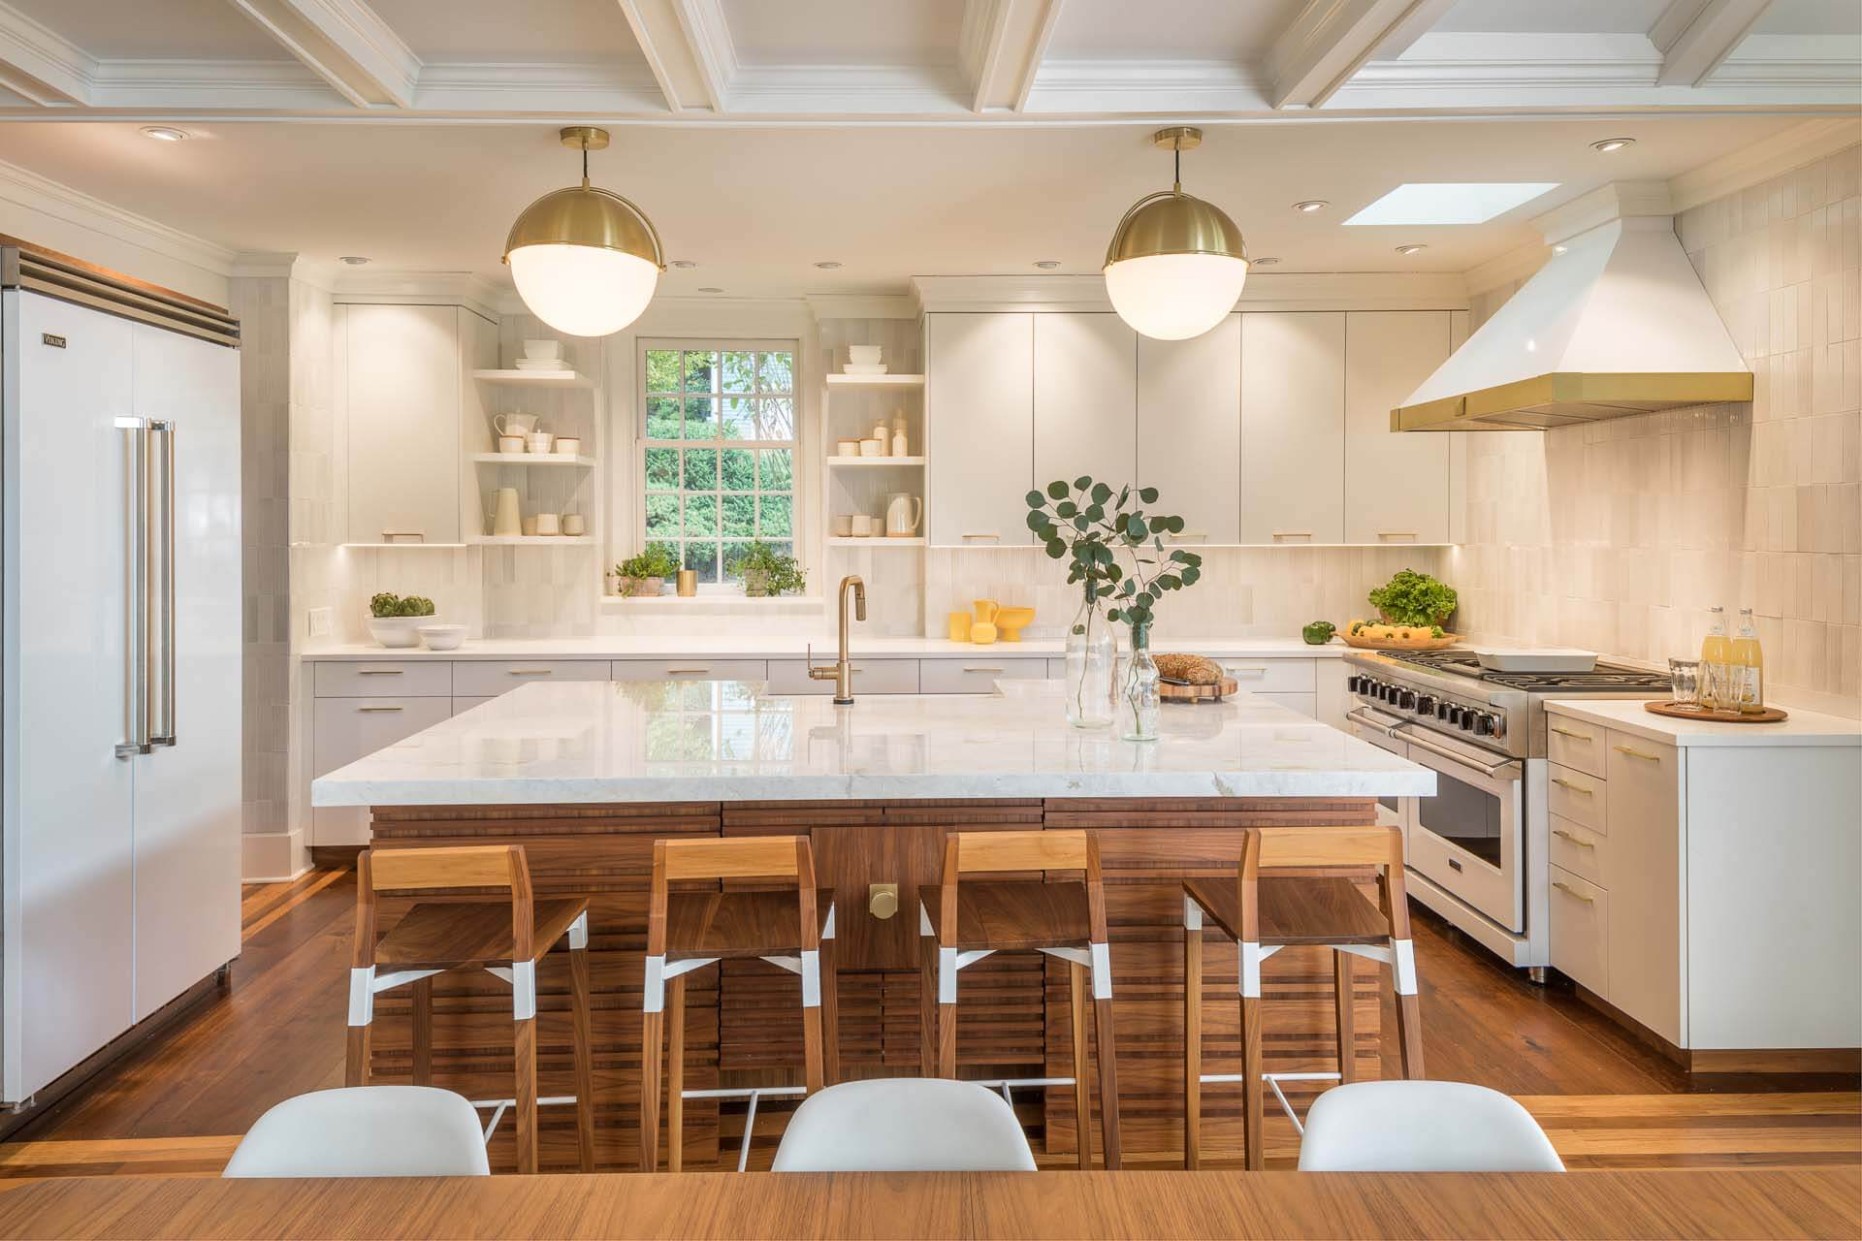 Contemporary Kitchen Design - Bilotta Kitchen & Home, NY - contemporary kitchens